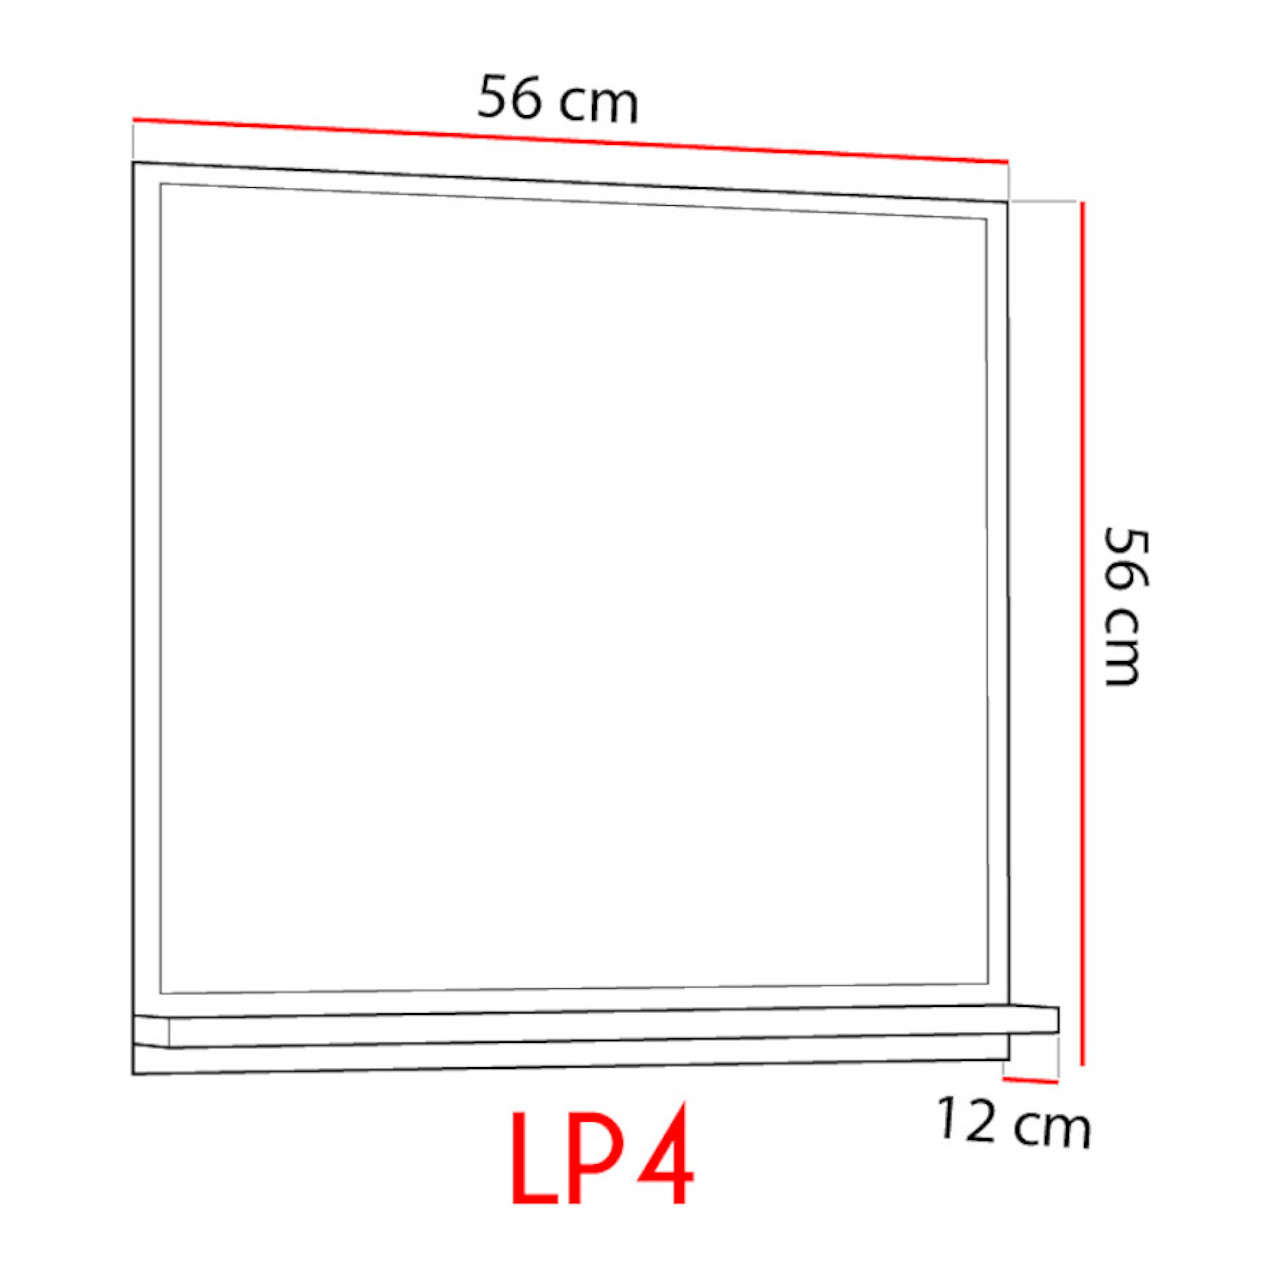 Wymiary: Lustro łazienkowe LUPO LP4